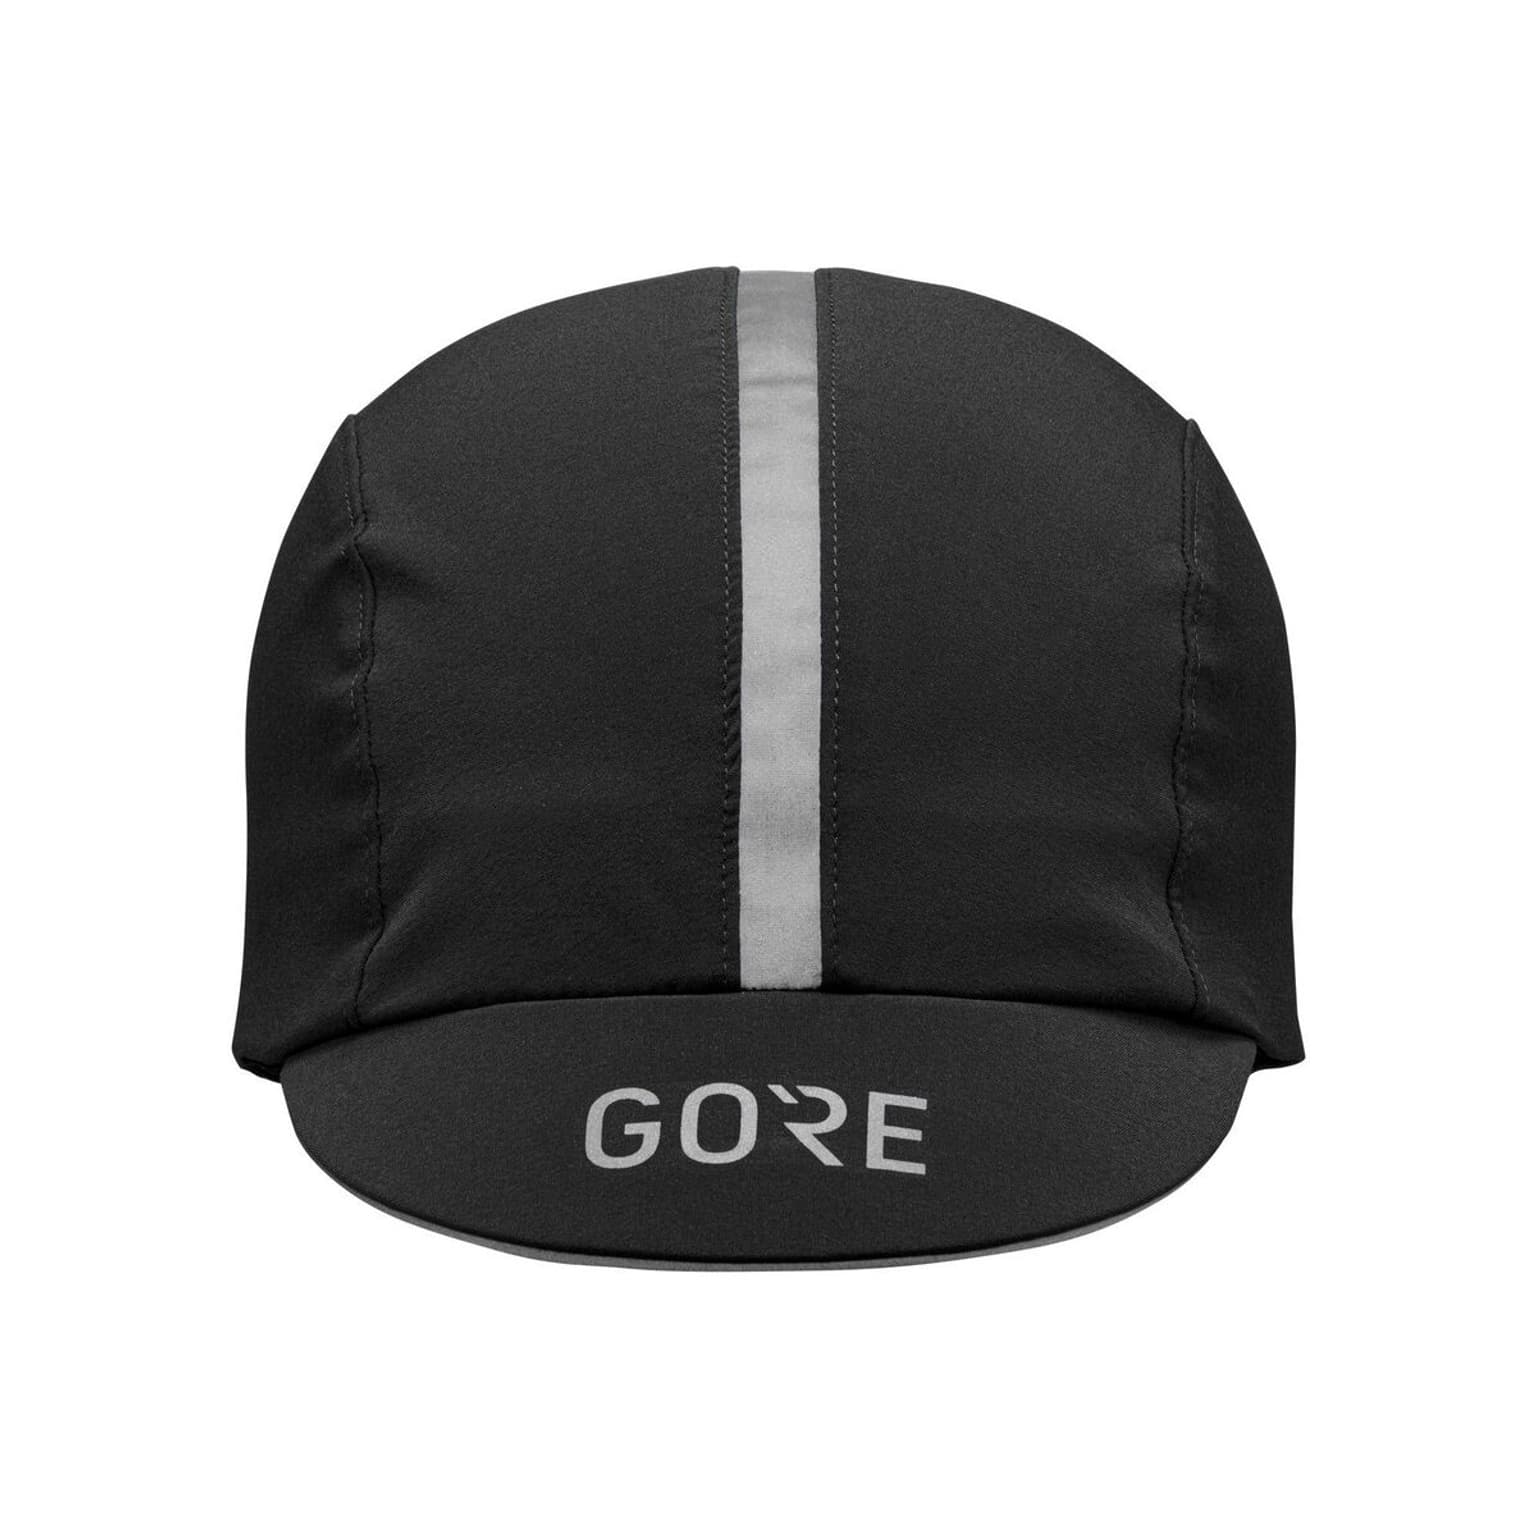 Gore Gore Bike-Mütze Bike-Mütze schwarz 1